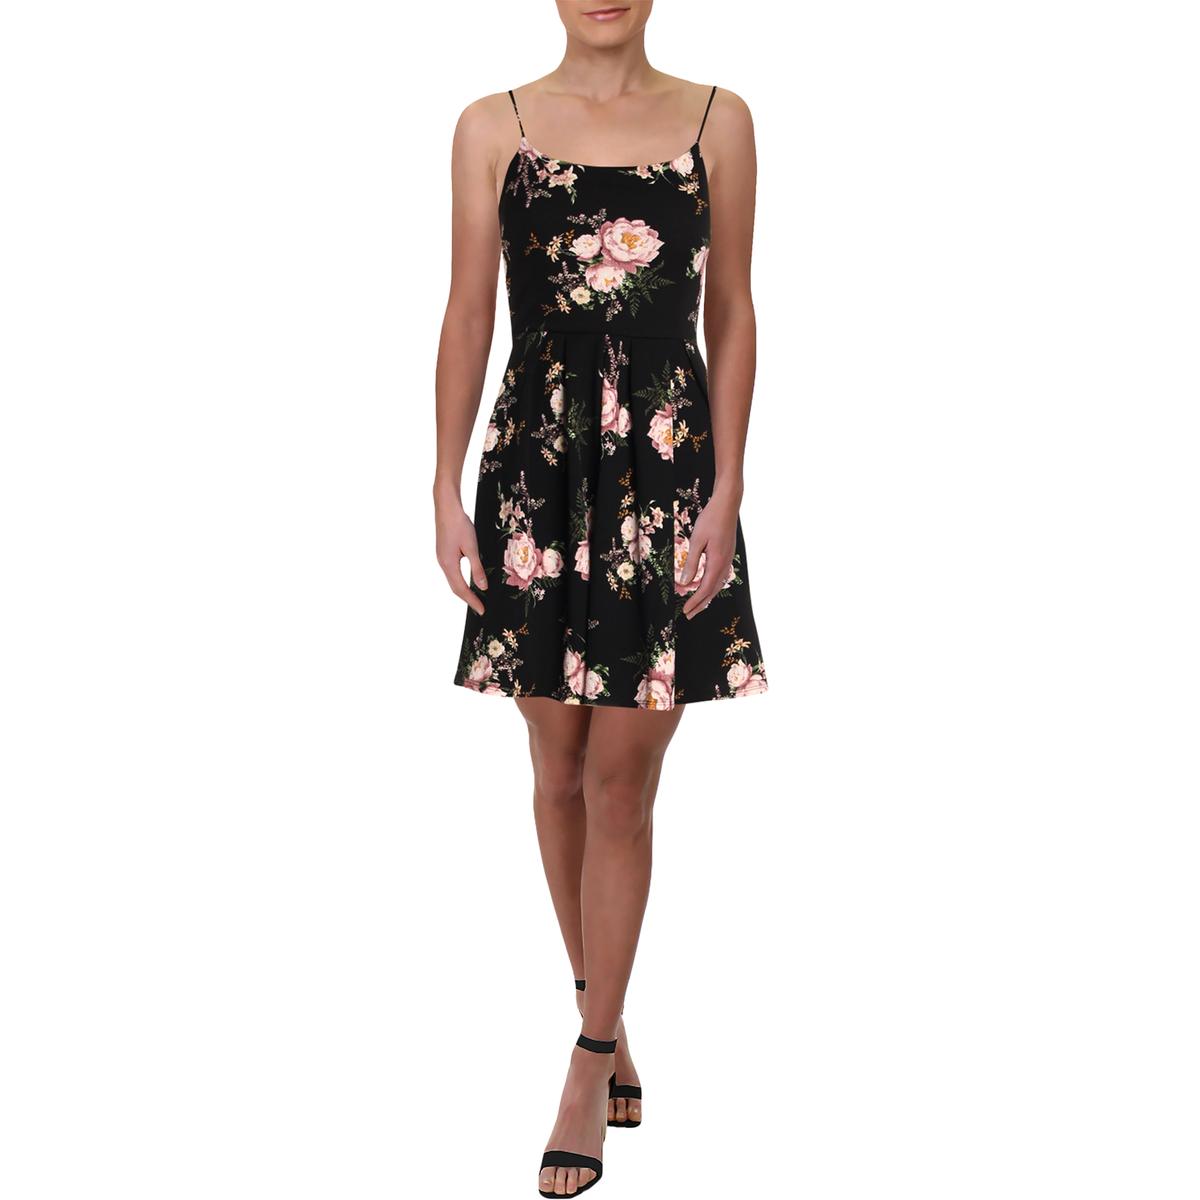 Aqua Womens Black Floral Mini Party Skater Dress L BHFO 2079 | eBay